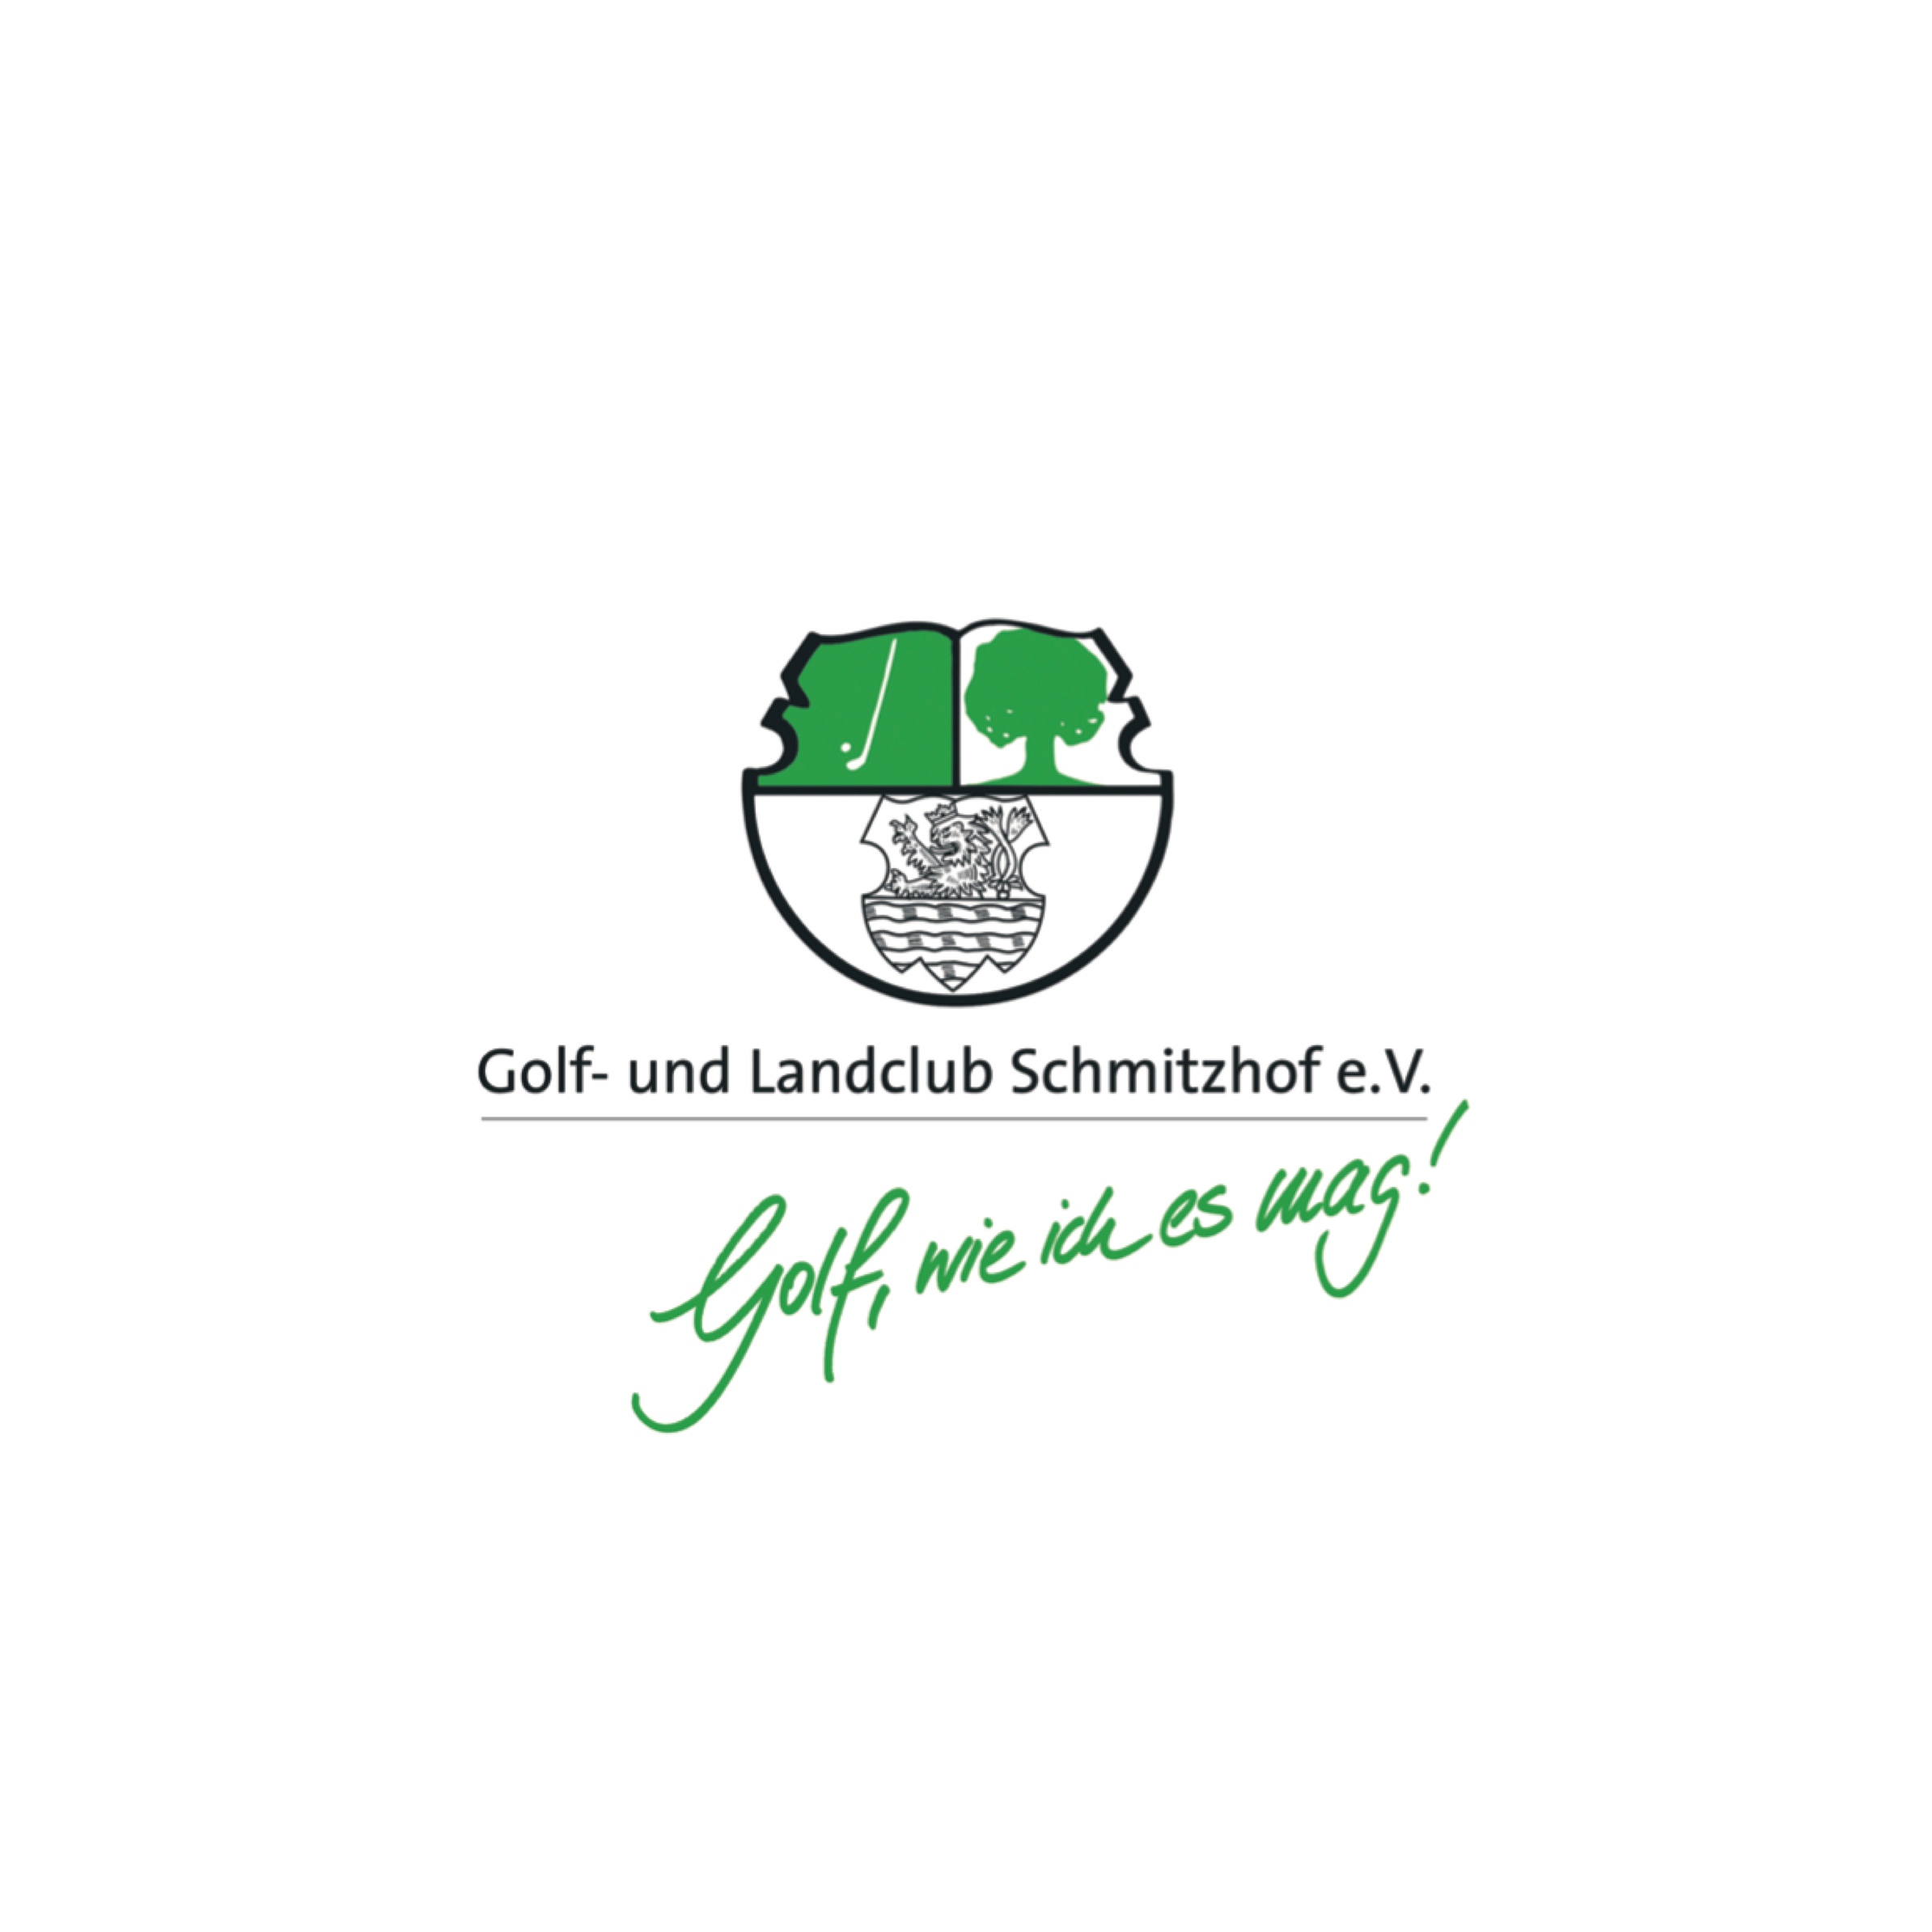 58. Schmitzhof (Golf- und Landclub Schmitzhof e.V.)